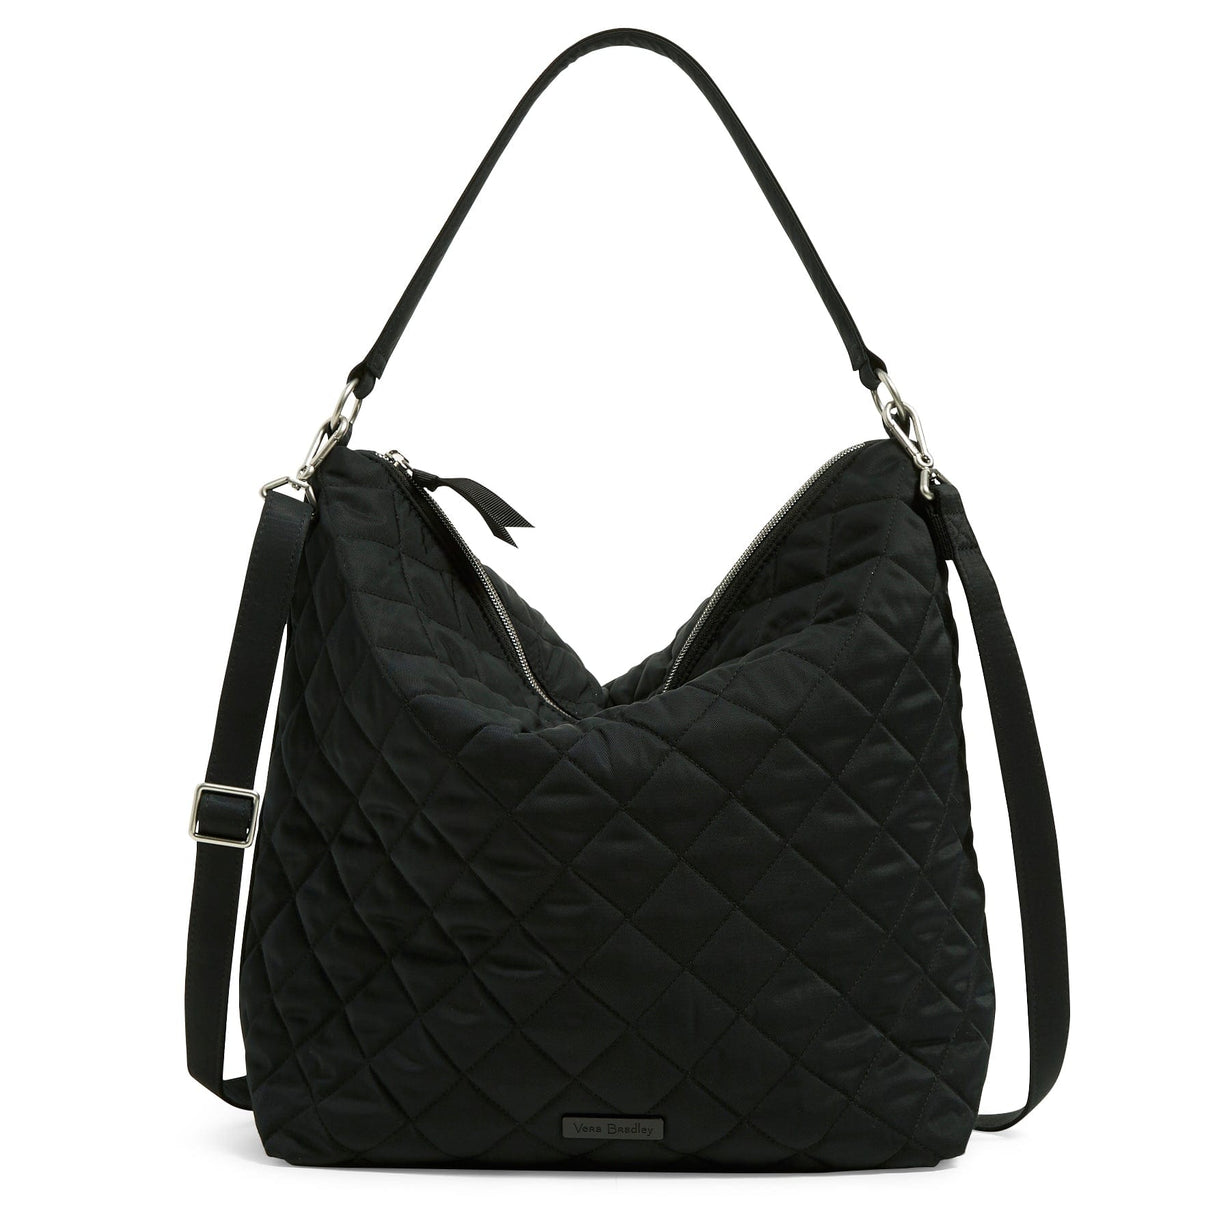 Khaki Leather Hobo Bag Crossbody Shoulder Bags for Work